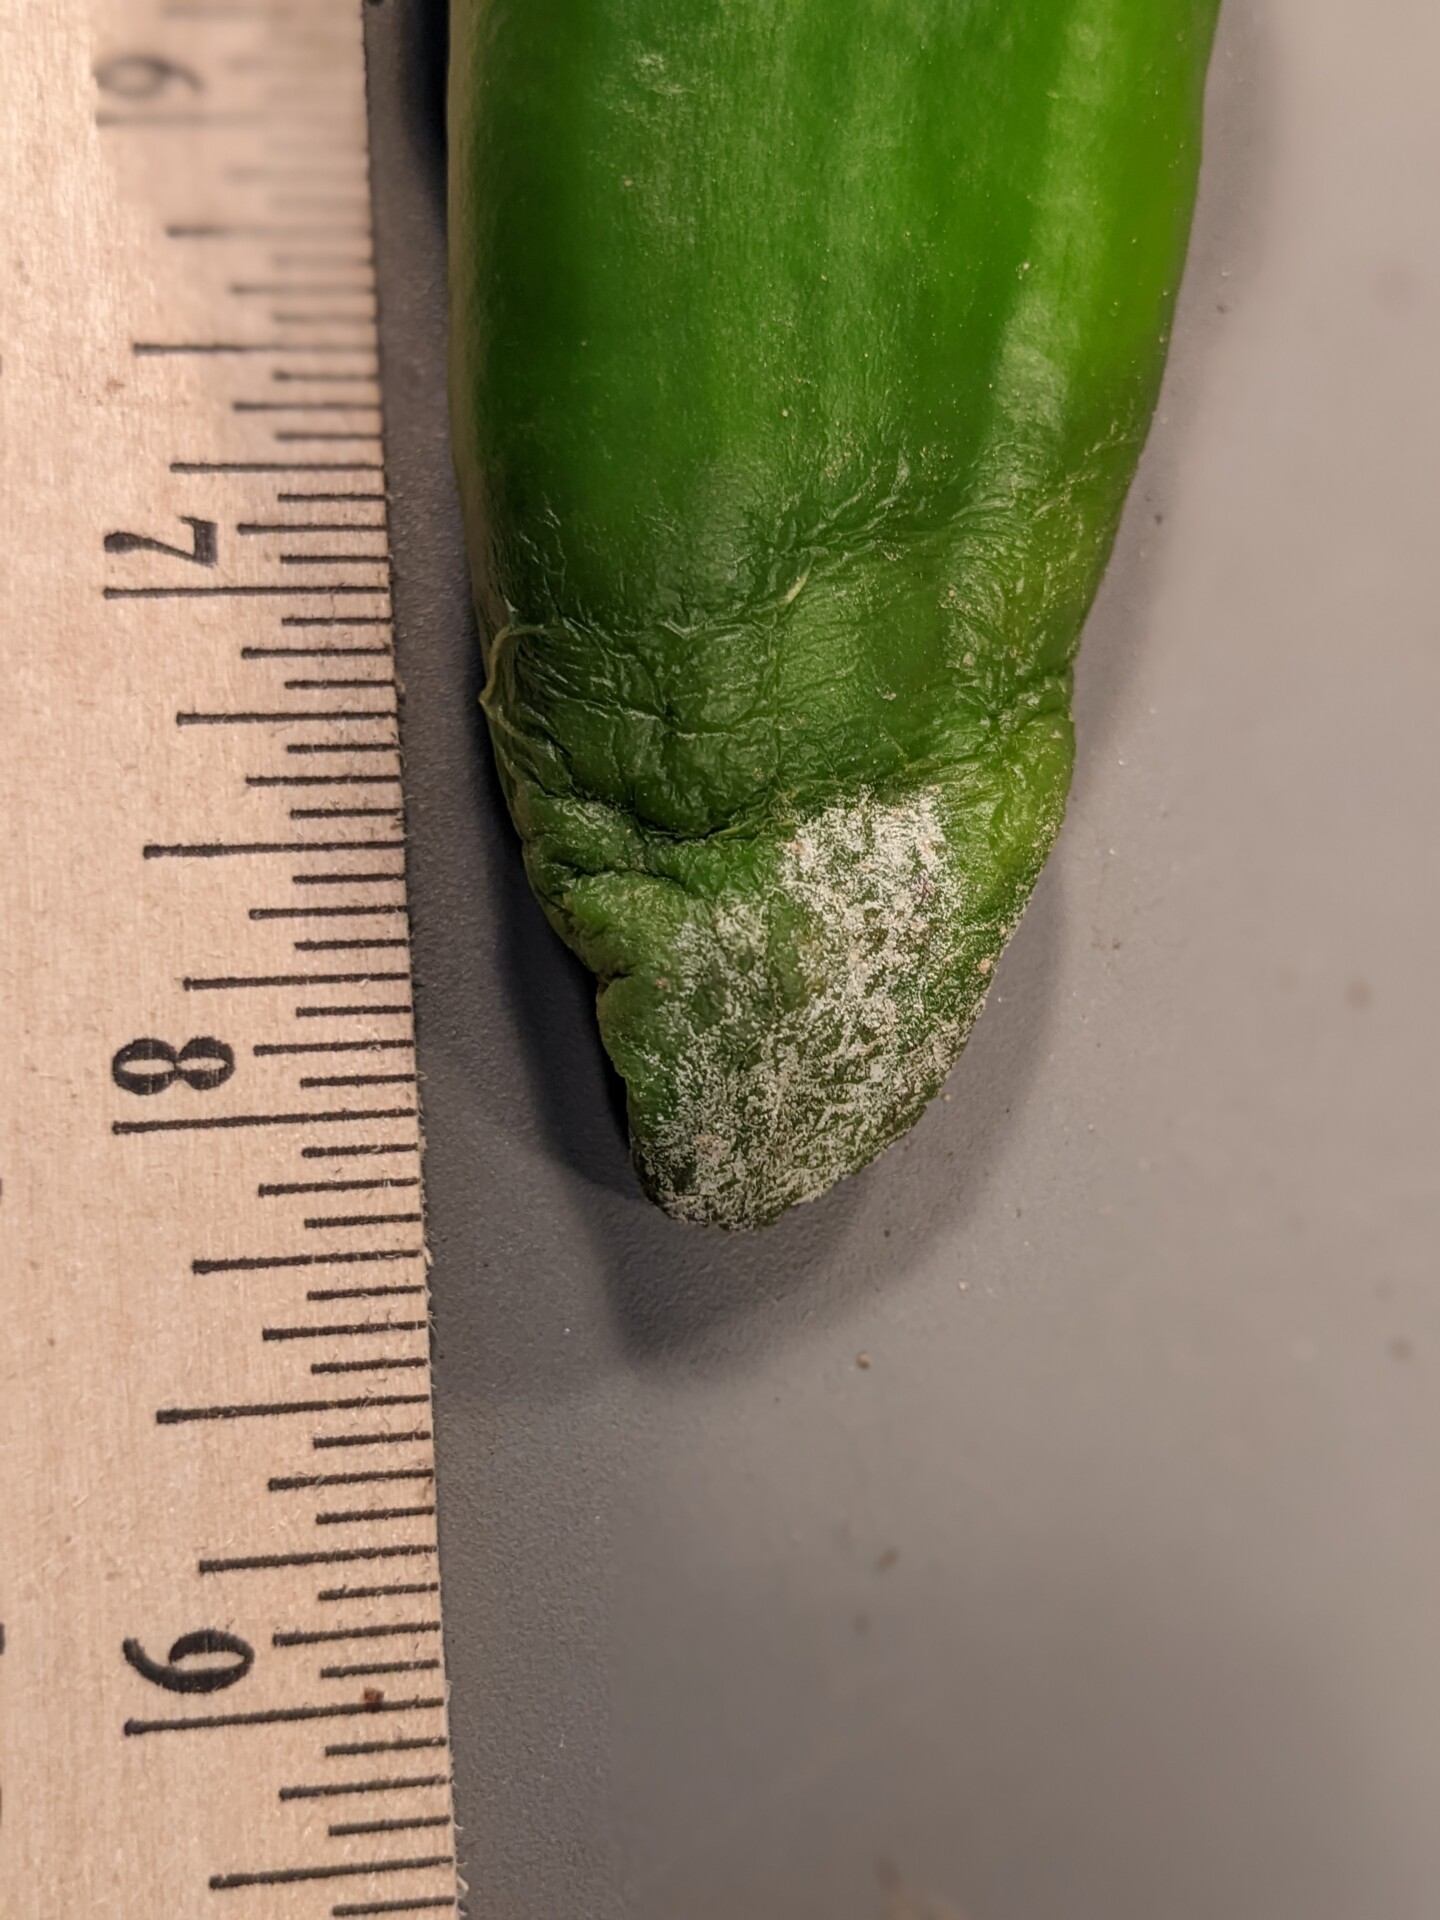 Phytophthora blight on pepper fruit showing sporulation on surface of fruit.